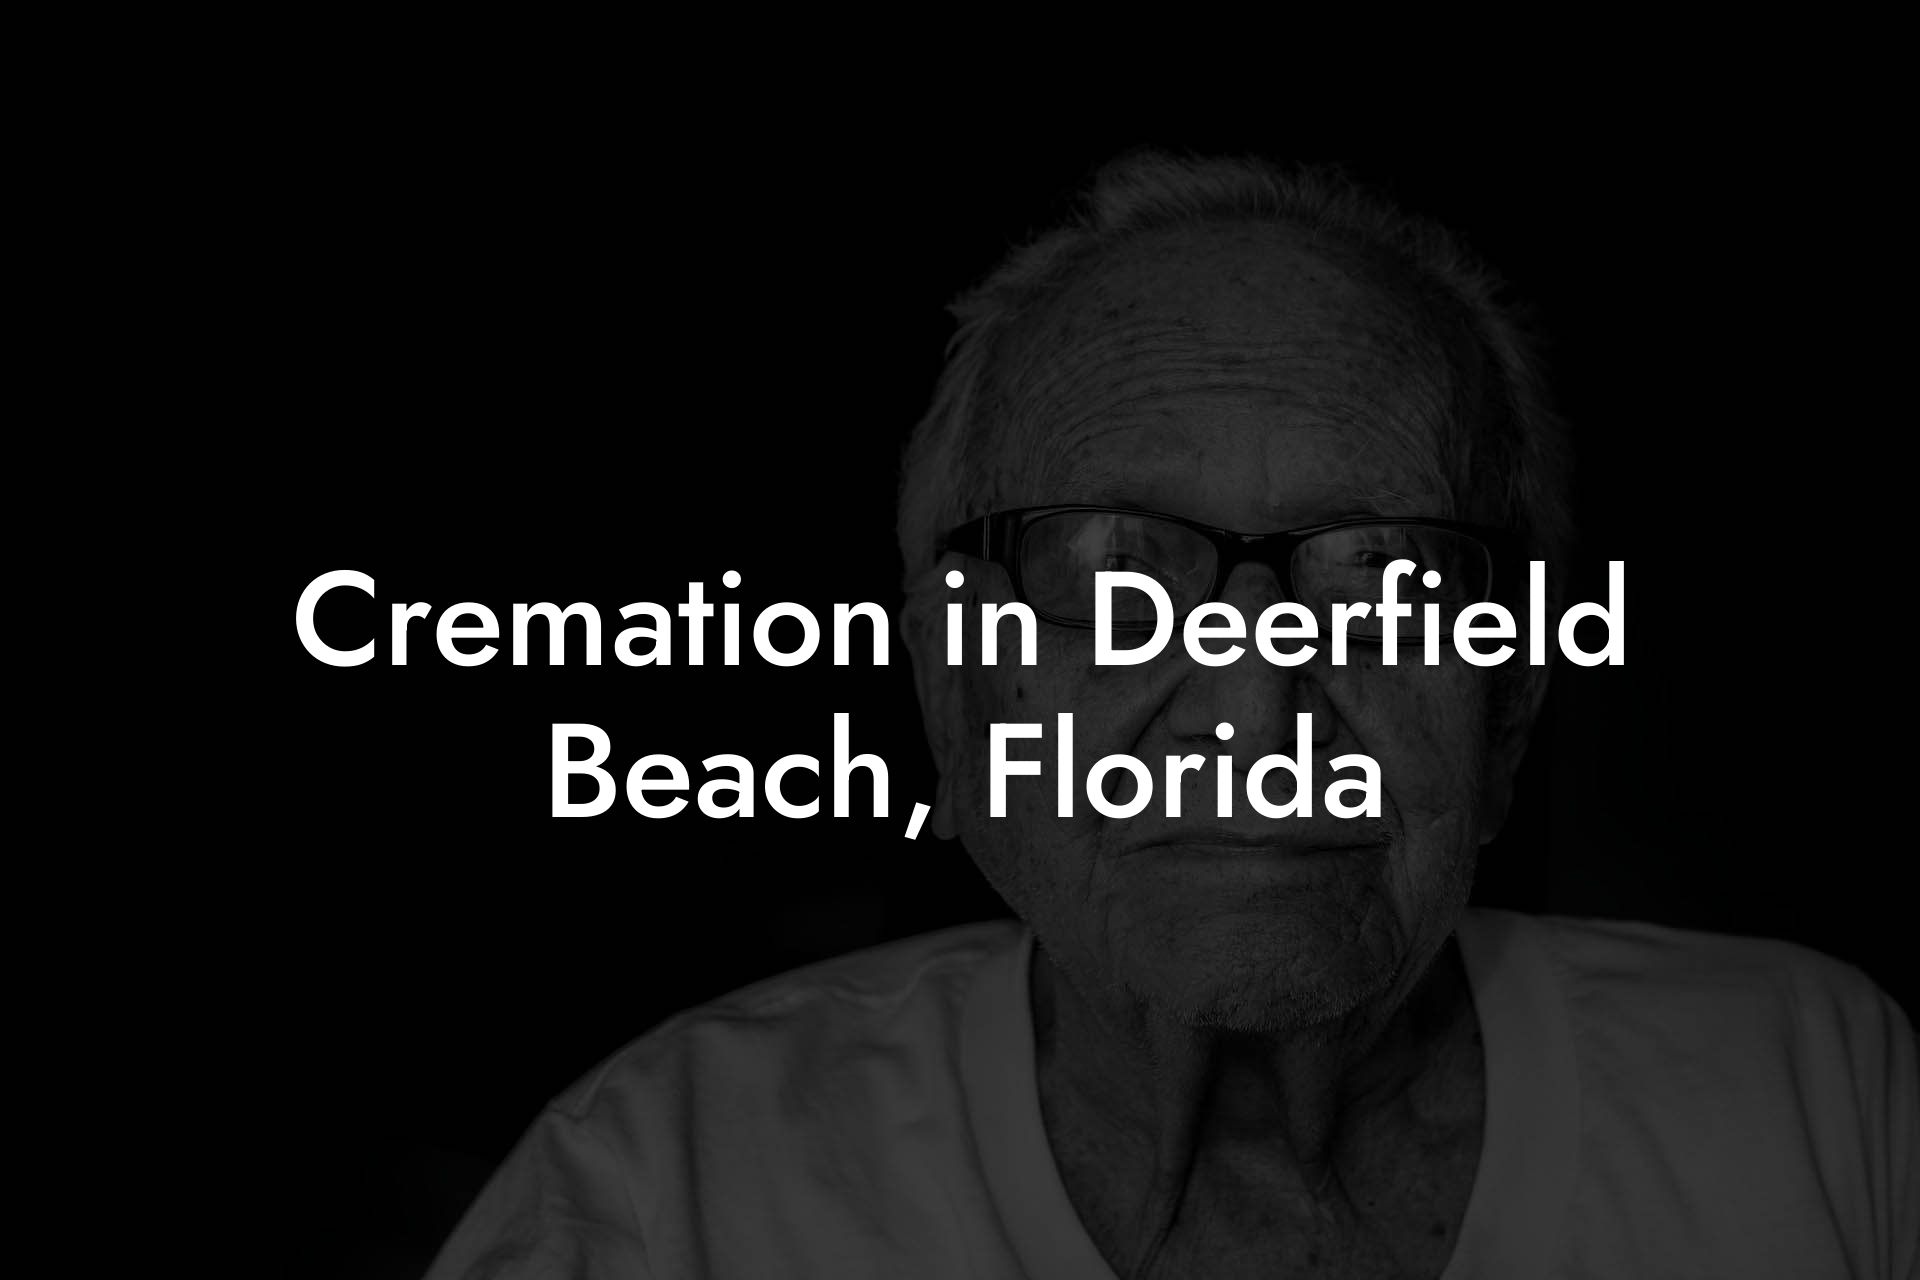 Cremation in Deerfield Beach, Florida